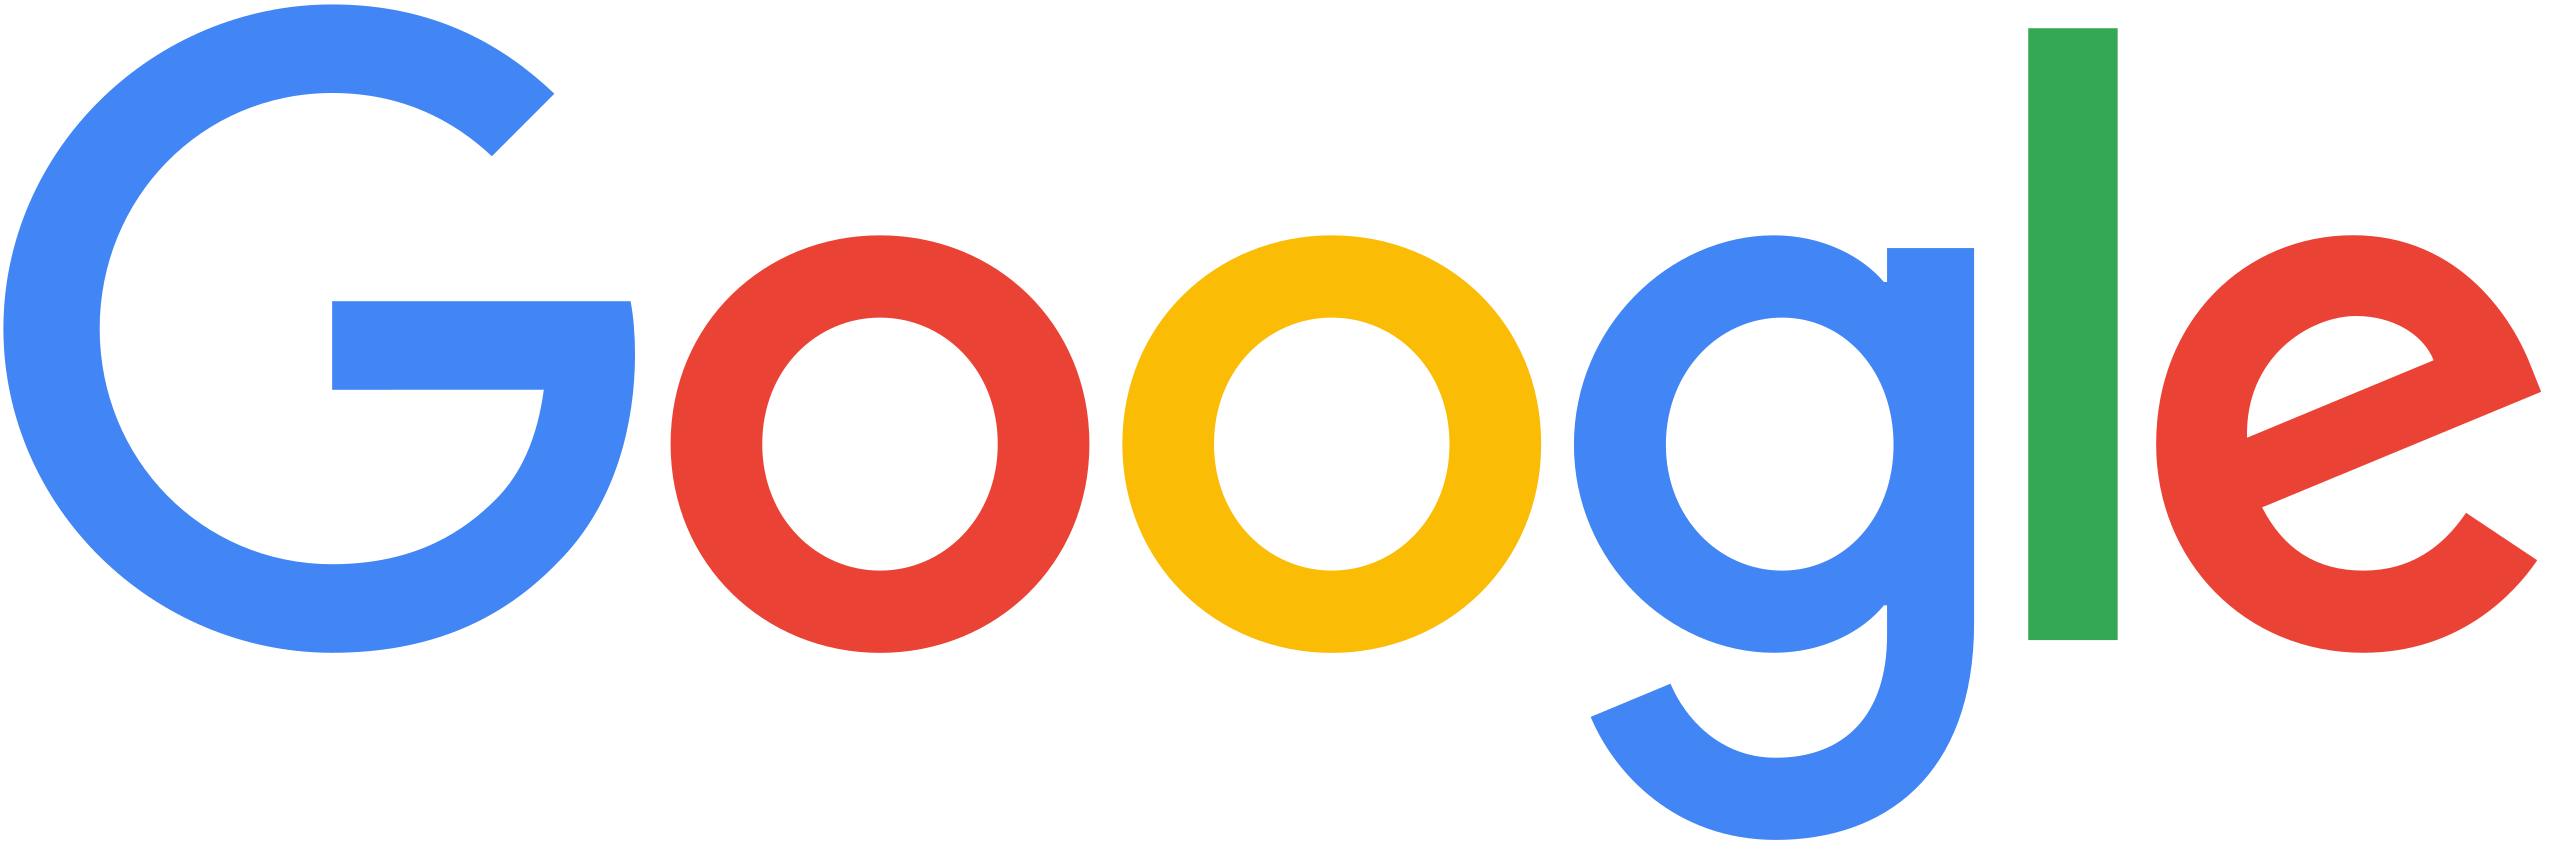 GoogleLogoSept12015.png